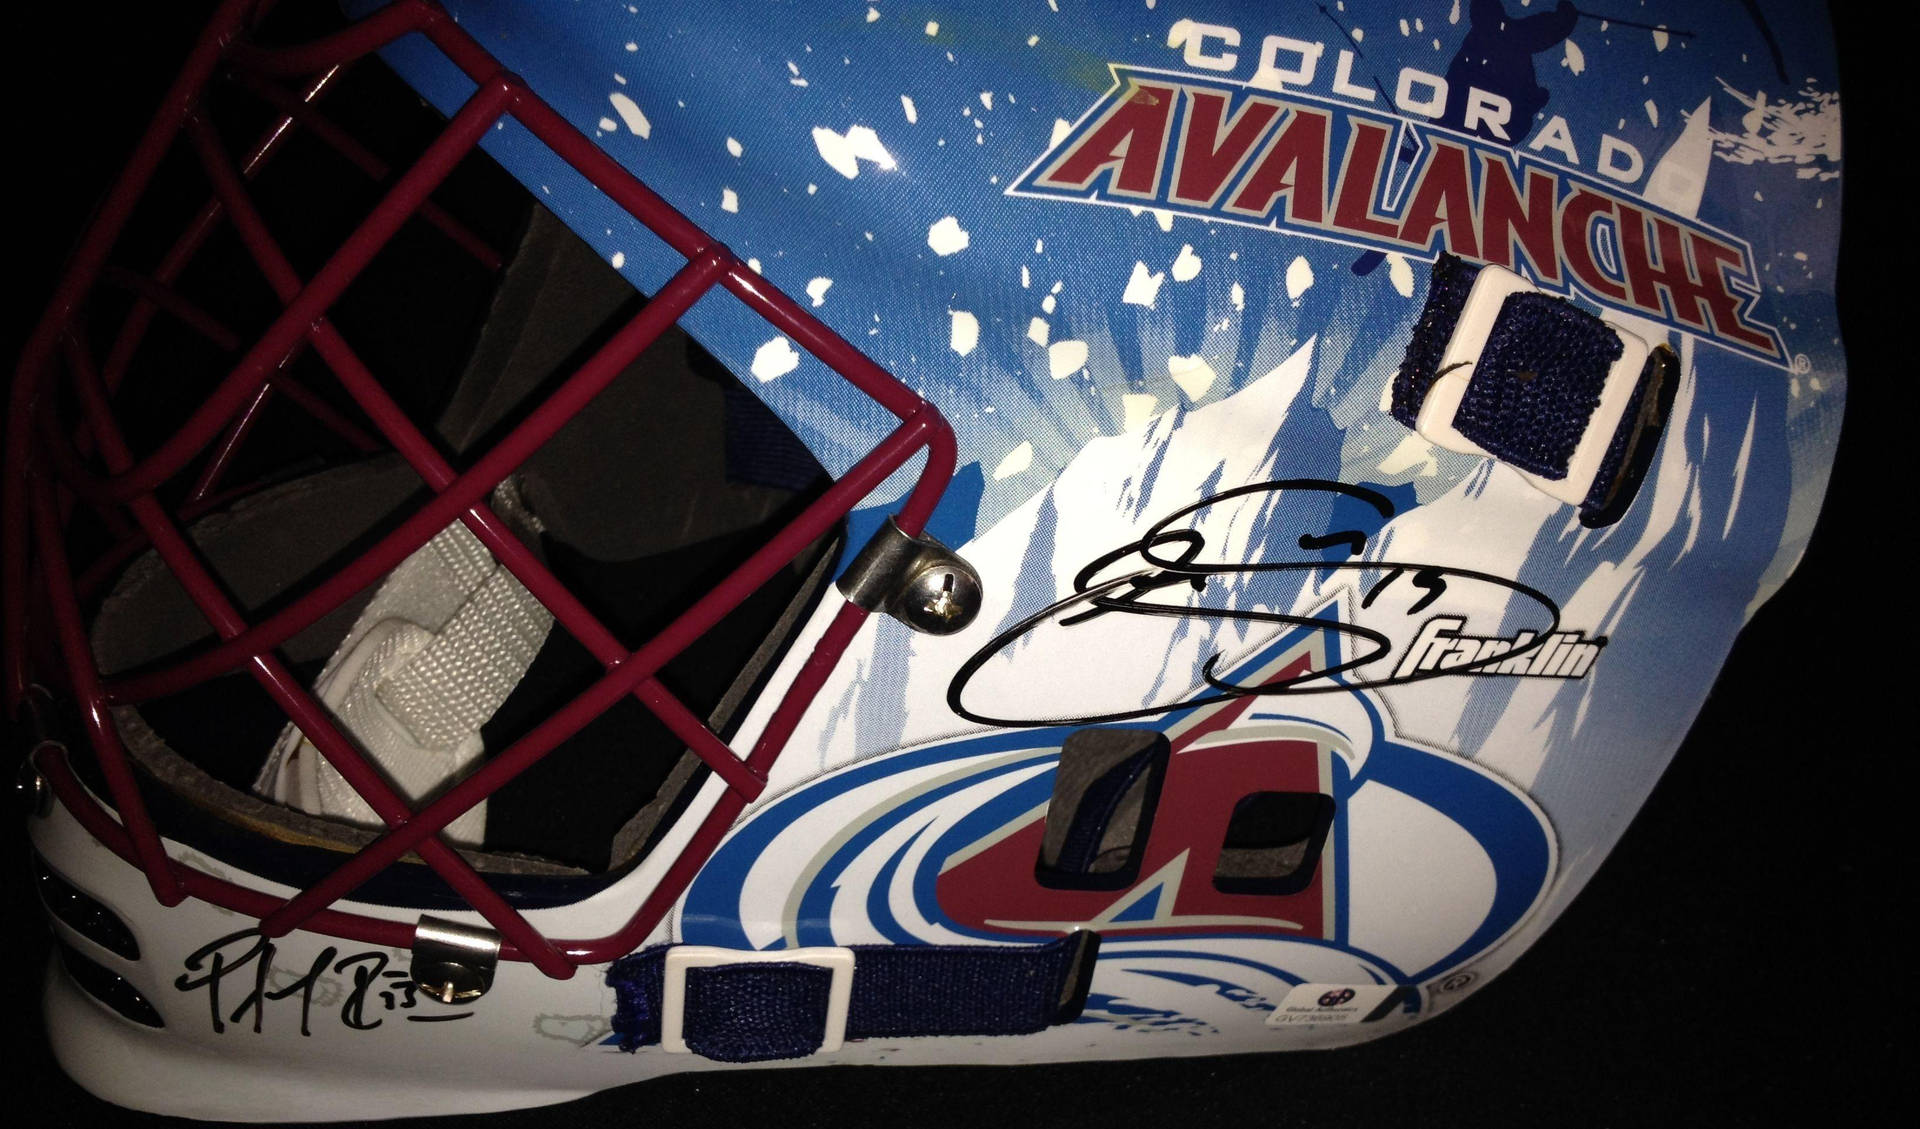 Colorado Avalanche Signed Helmet